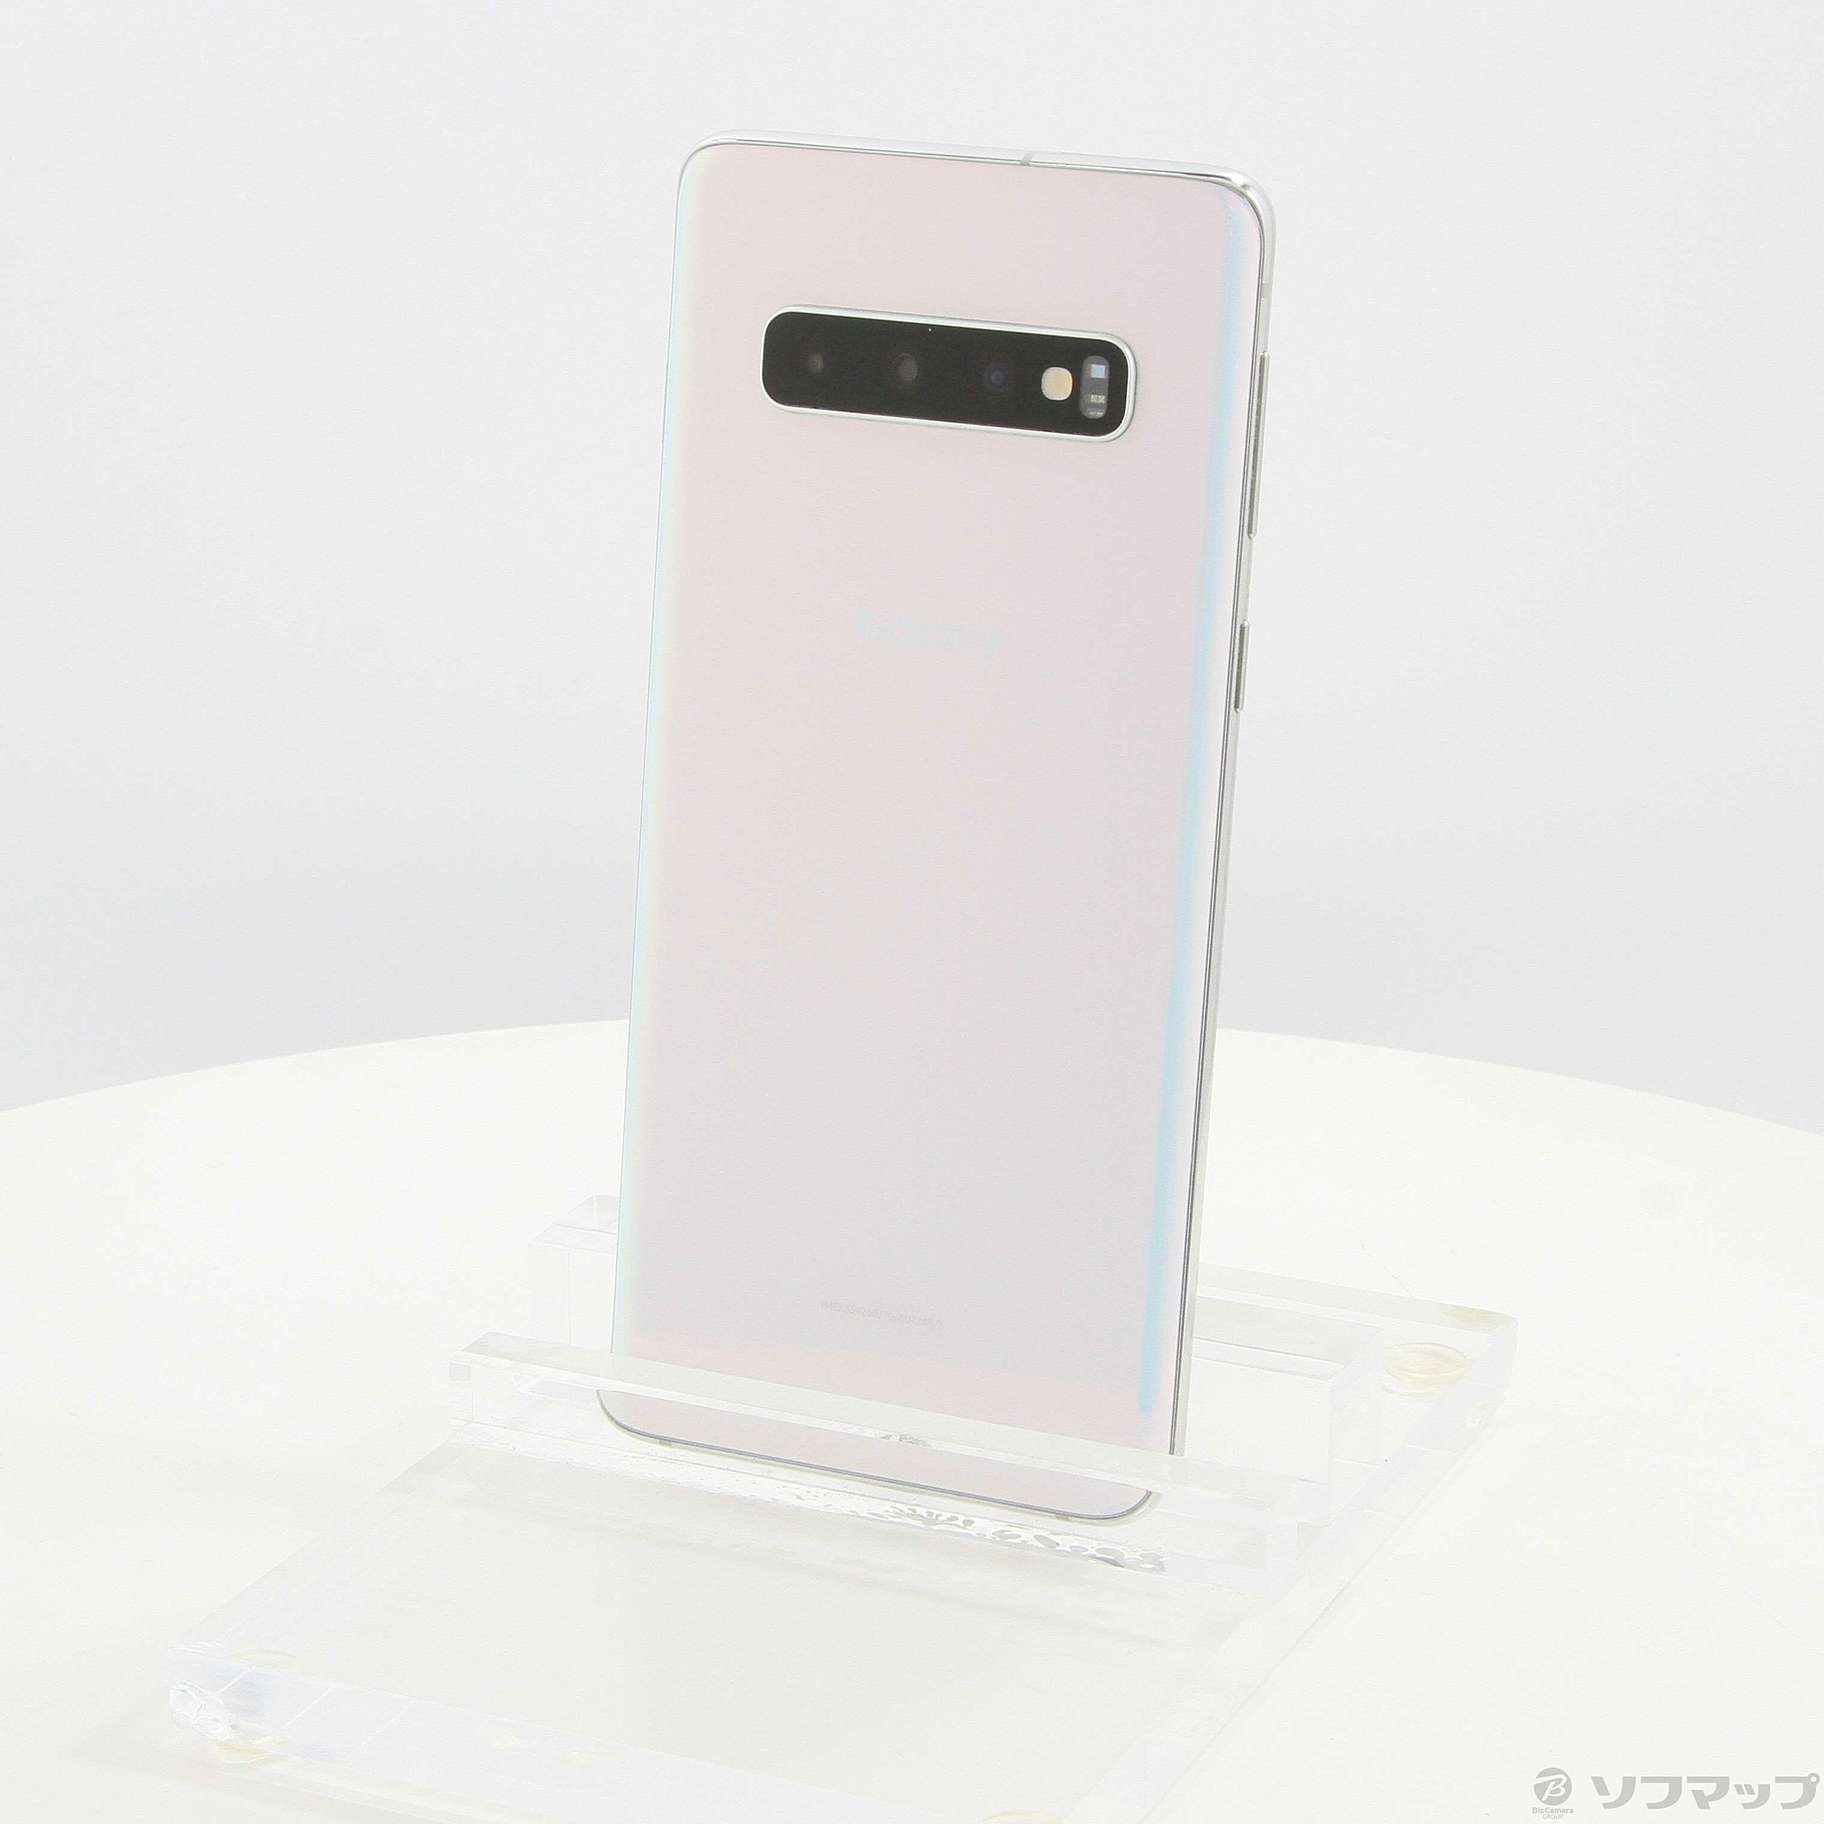 Galaxy S10 Prism White 128 GB SIMフリー